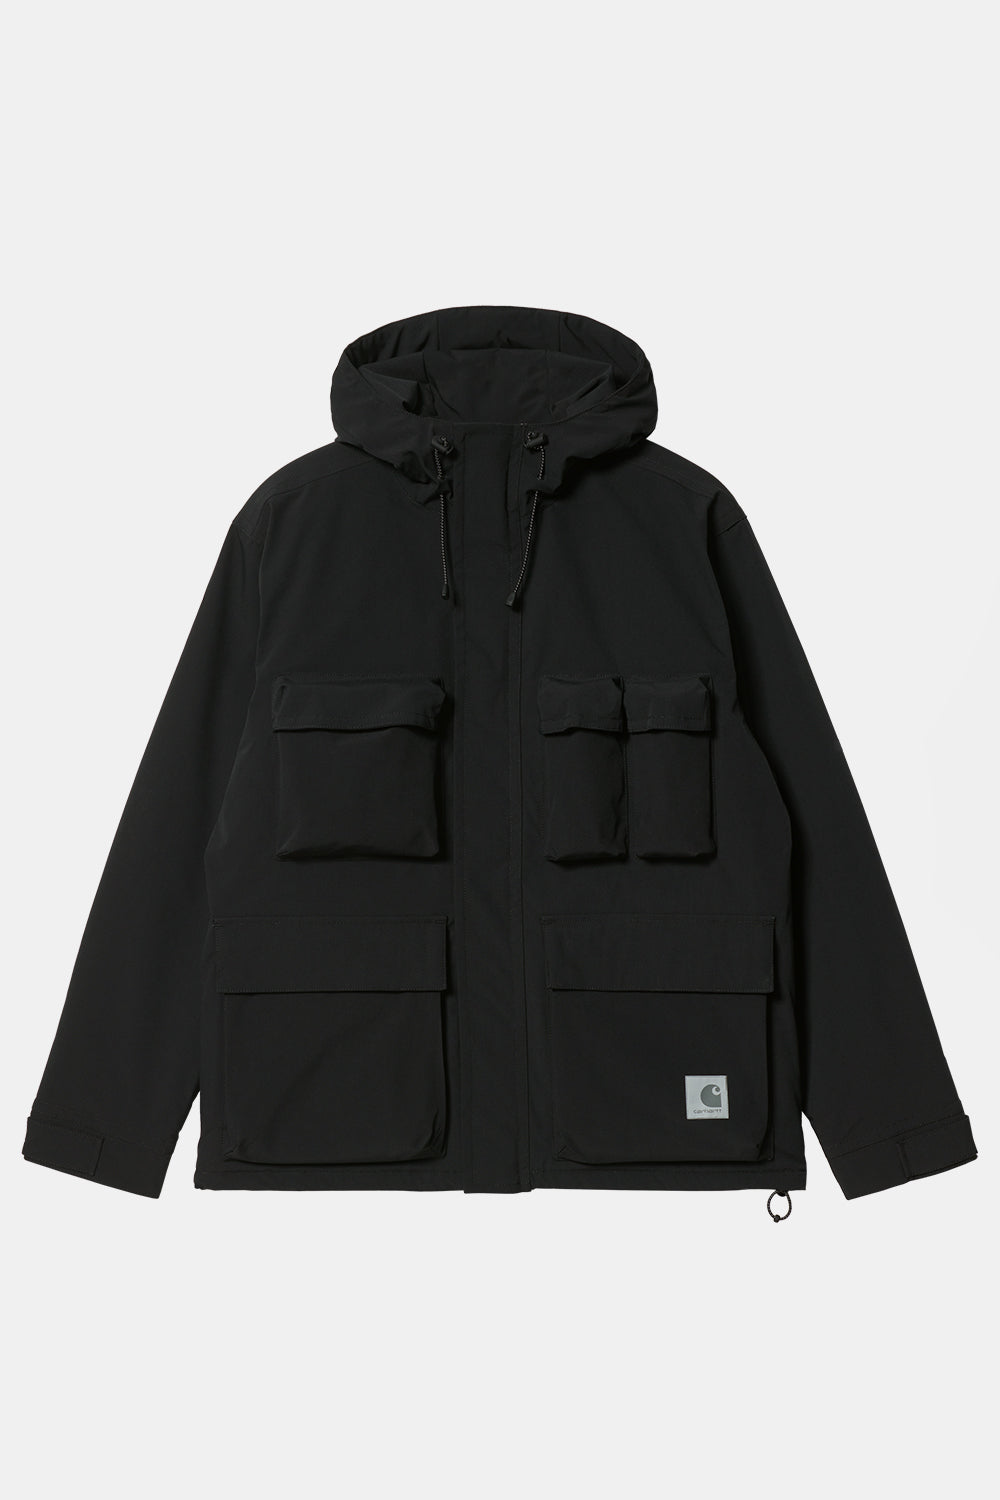 Carhartt WIP Kilda Jacket (Black) | Number Six